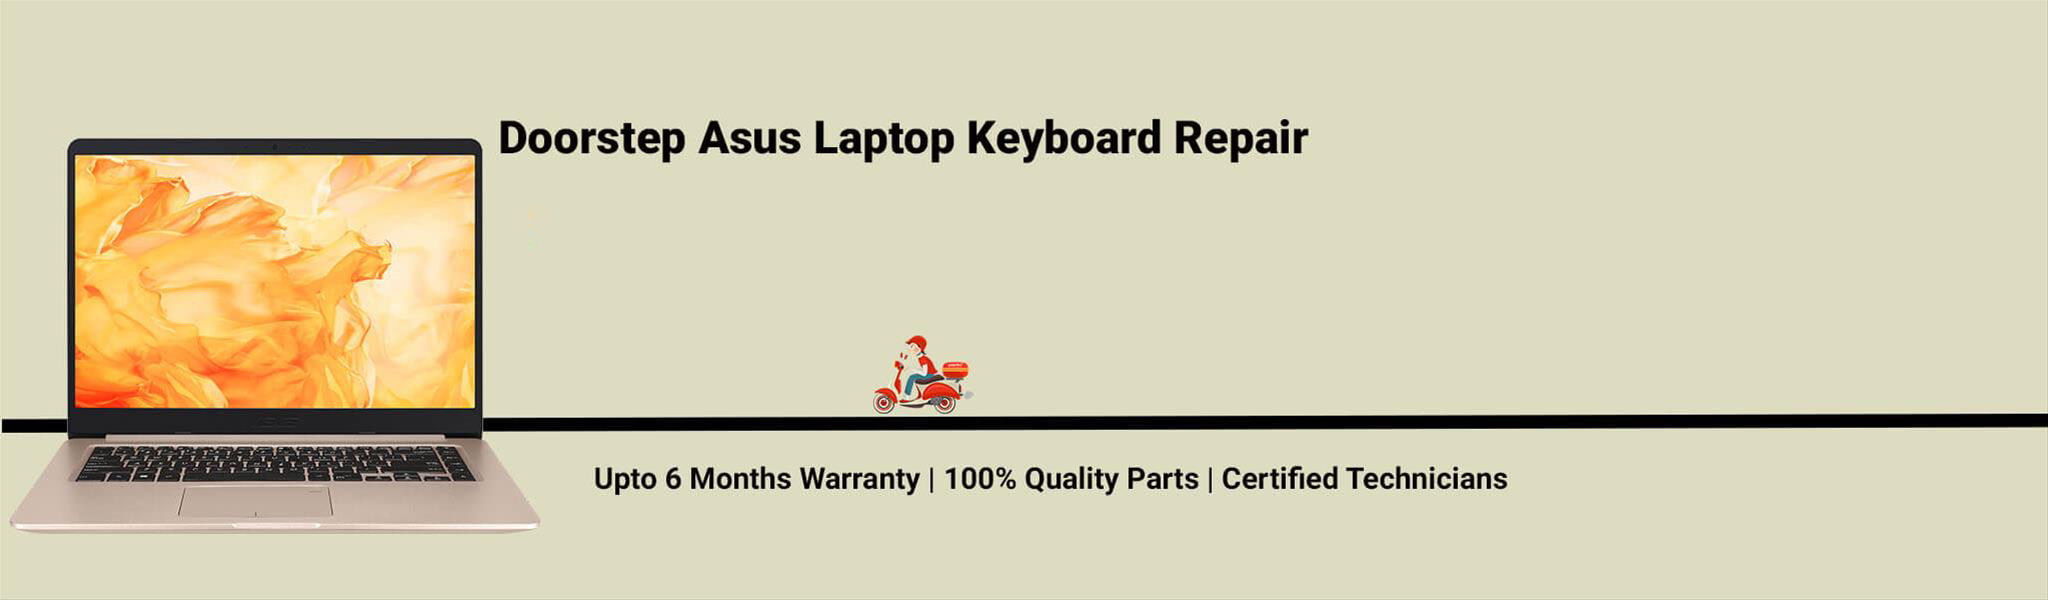 asus-laptop-keyboard-repair.jpg